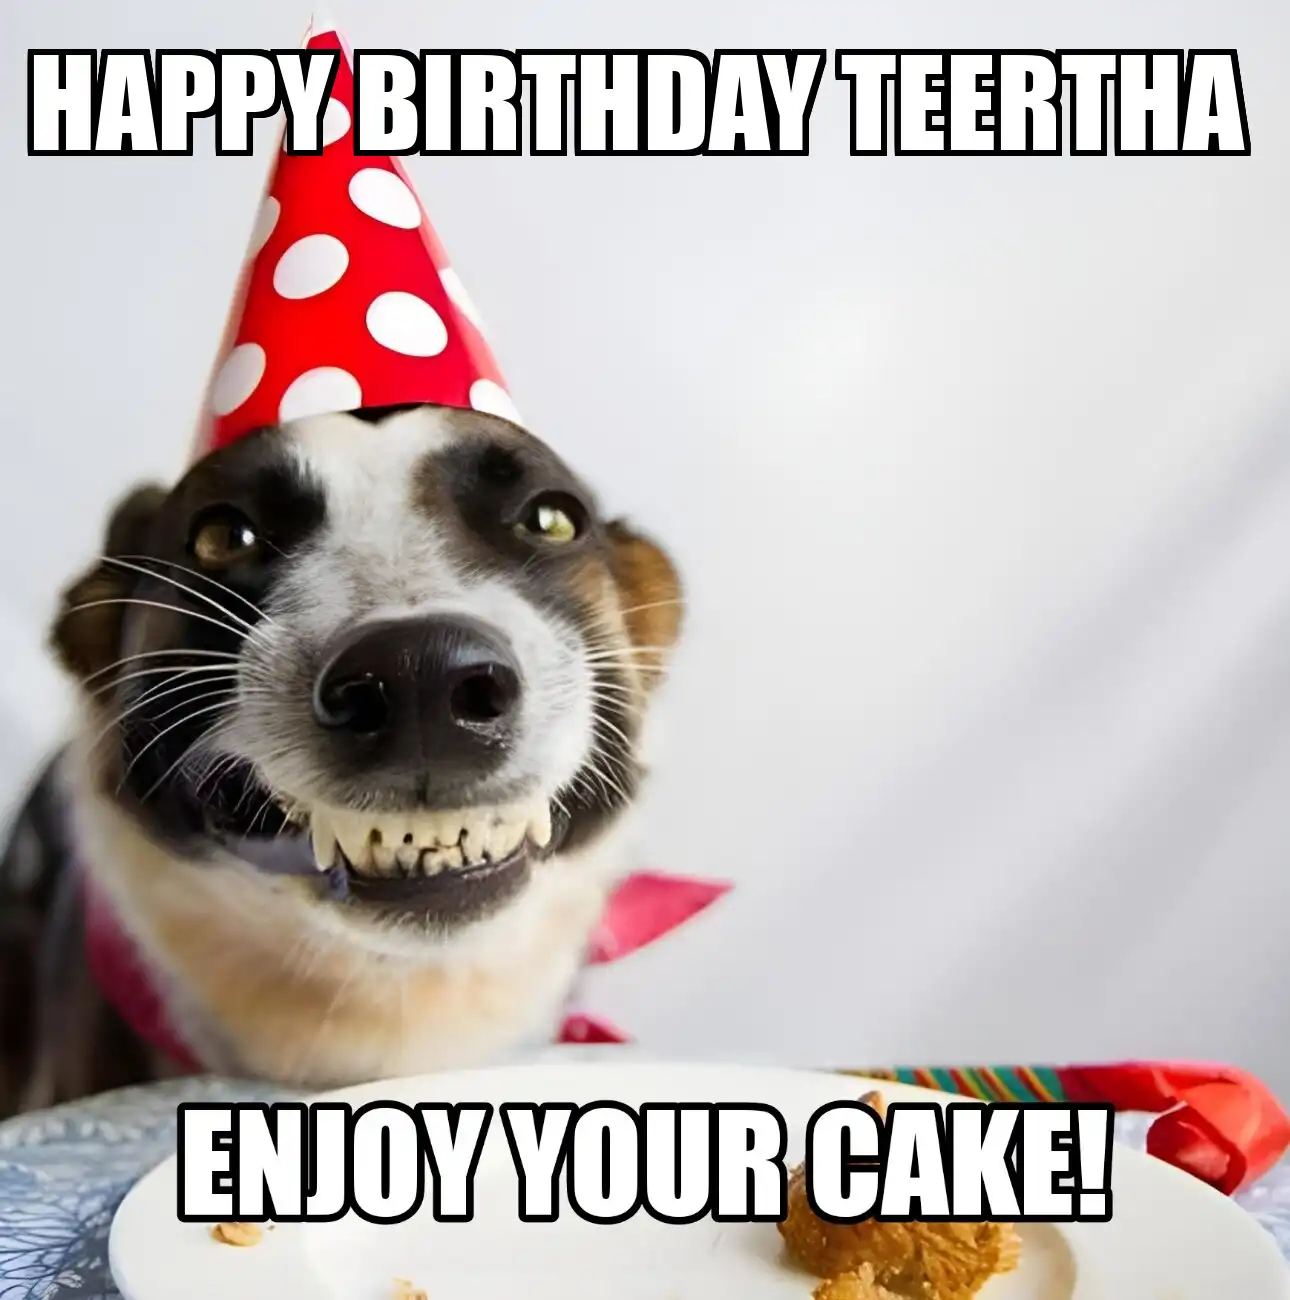 Happy Birthday Teertha Enjoy Your Cake Dog Meme